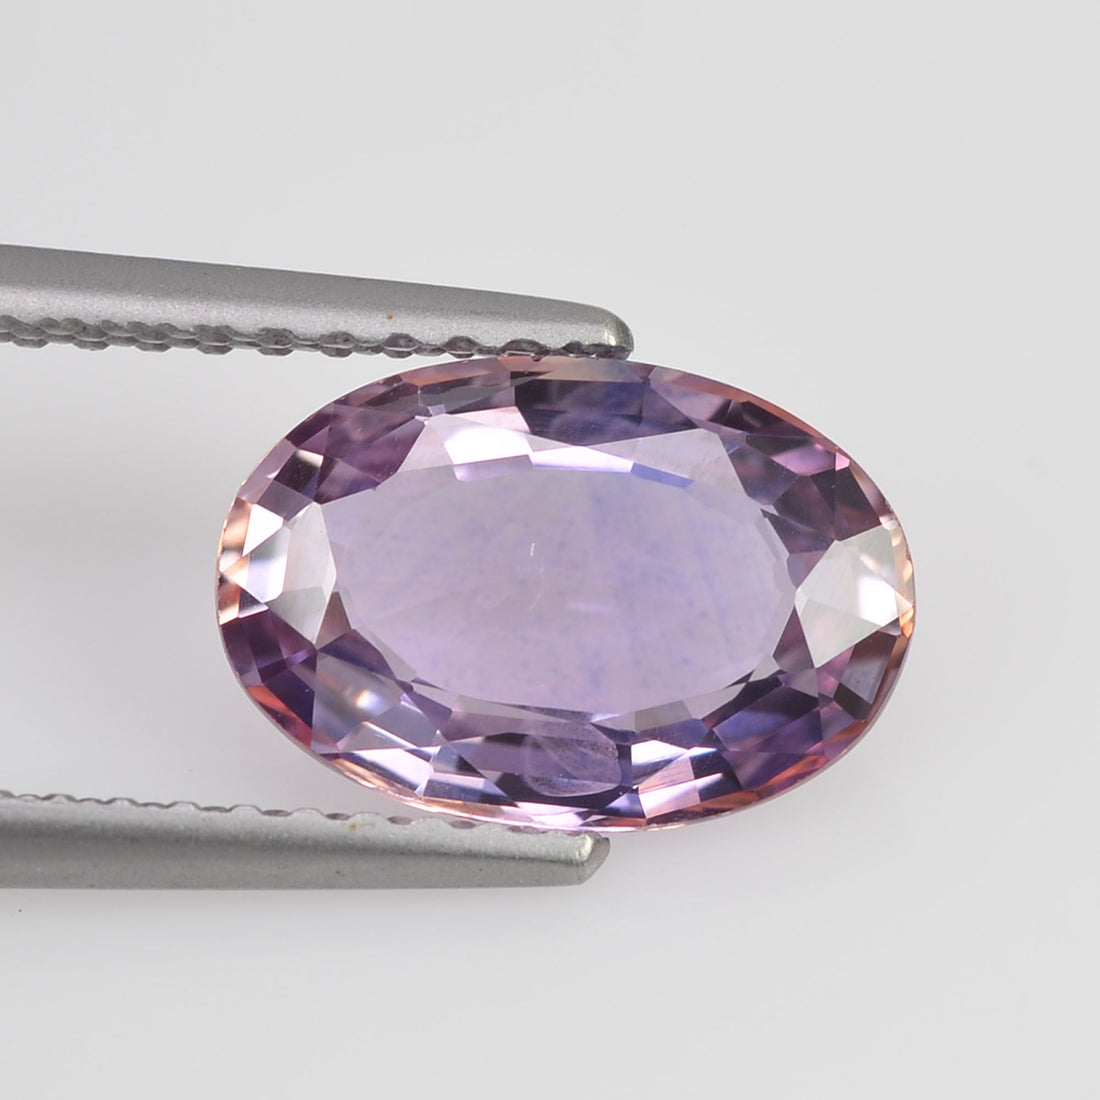 2.07 cts Natural Fancy Peach Blue Sapphire Loose Gemstone oval Cut - Thai Gems Export Ltd.